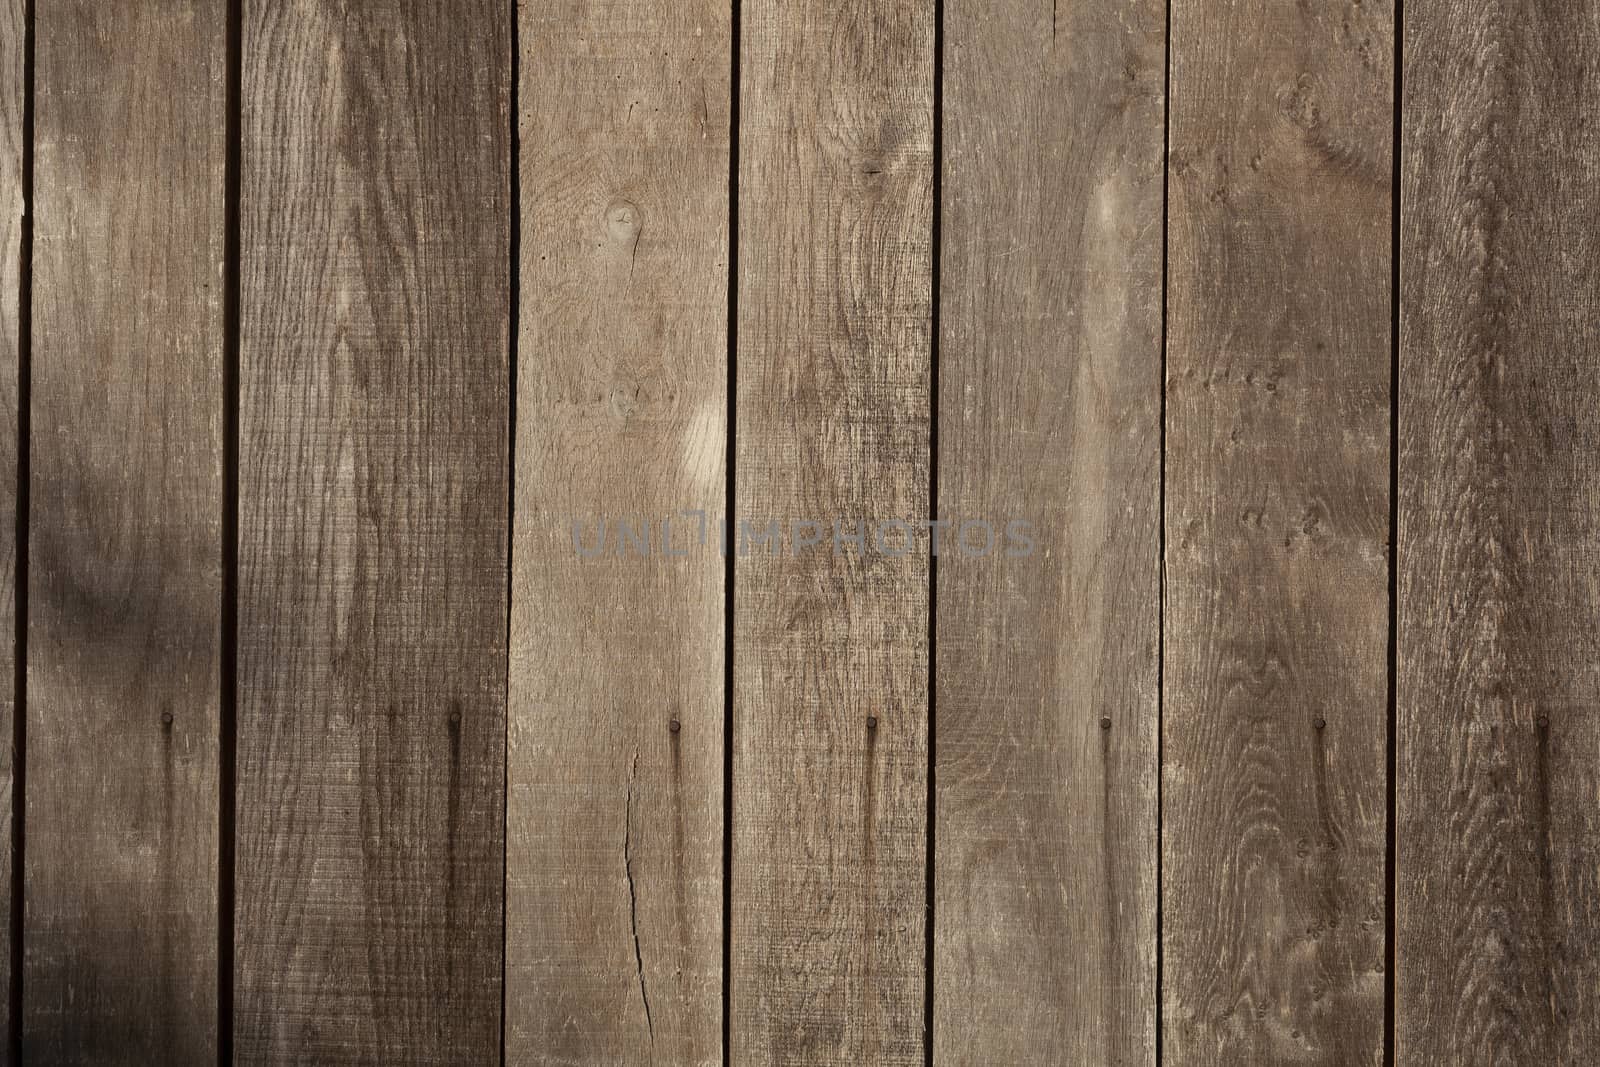 Brown wood planks background texture closeup by Tjeerdkruse